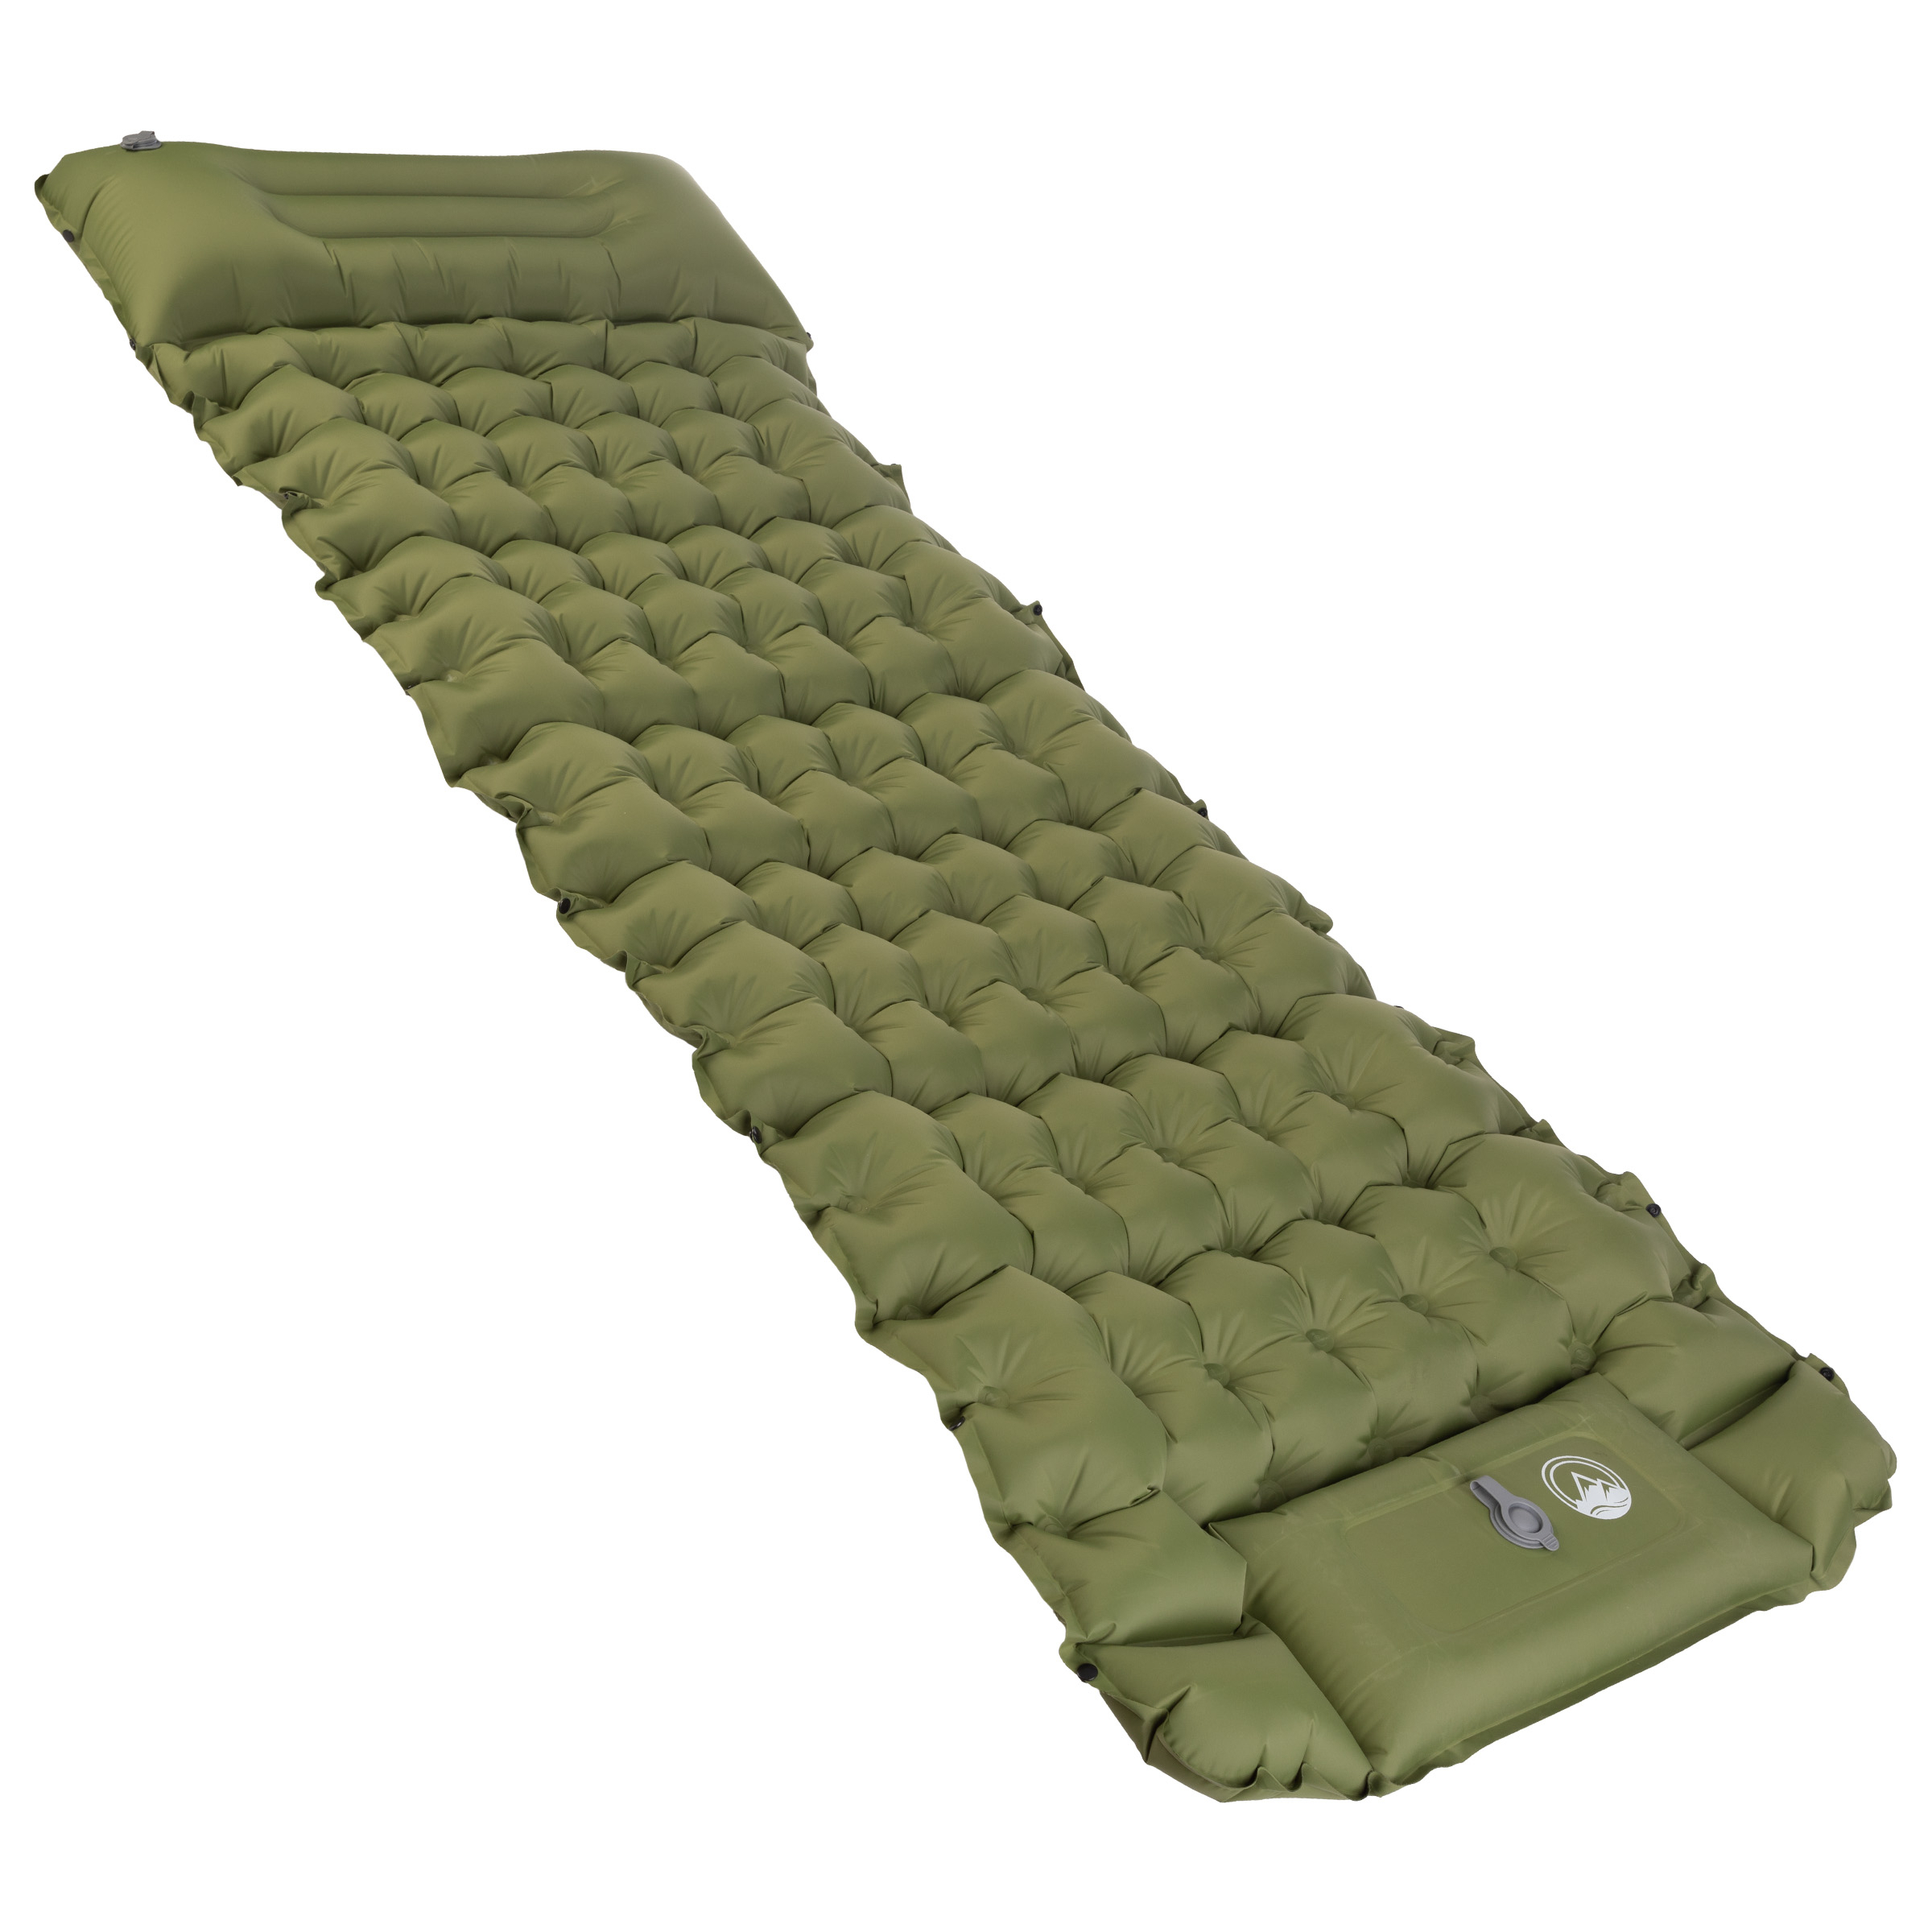 Inflatable Sleeping Pad Built-in Foot Pump Waterproof Mattress 77 X 27 Inch - Olive